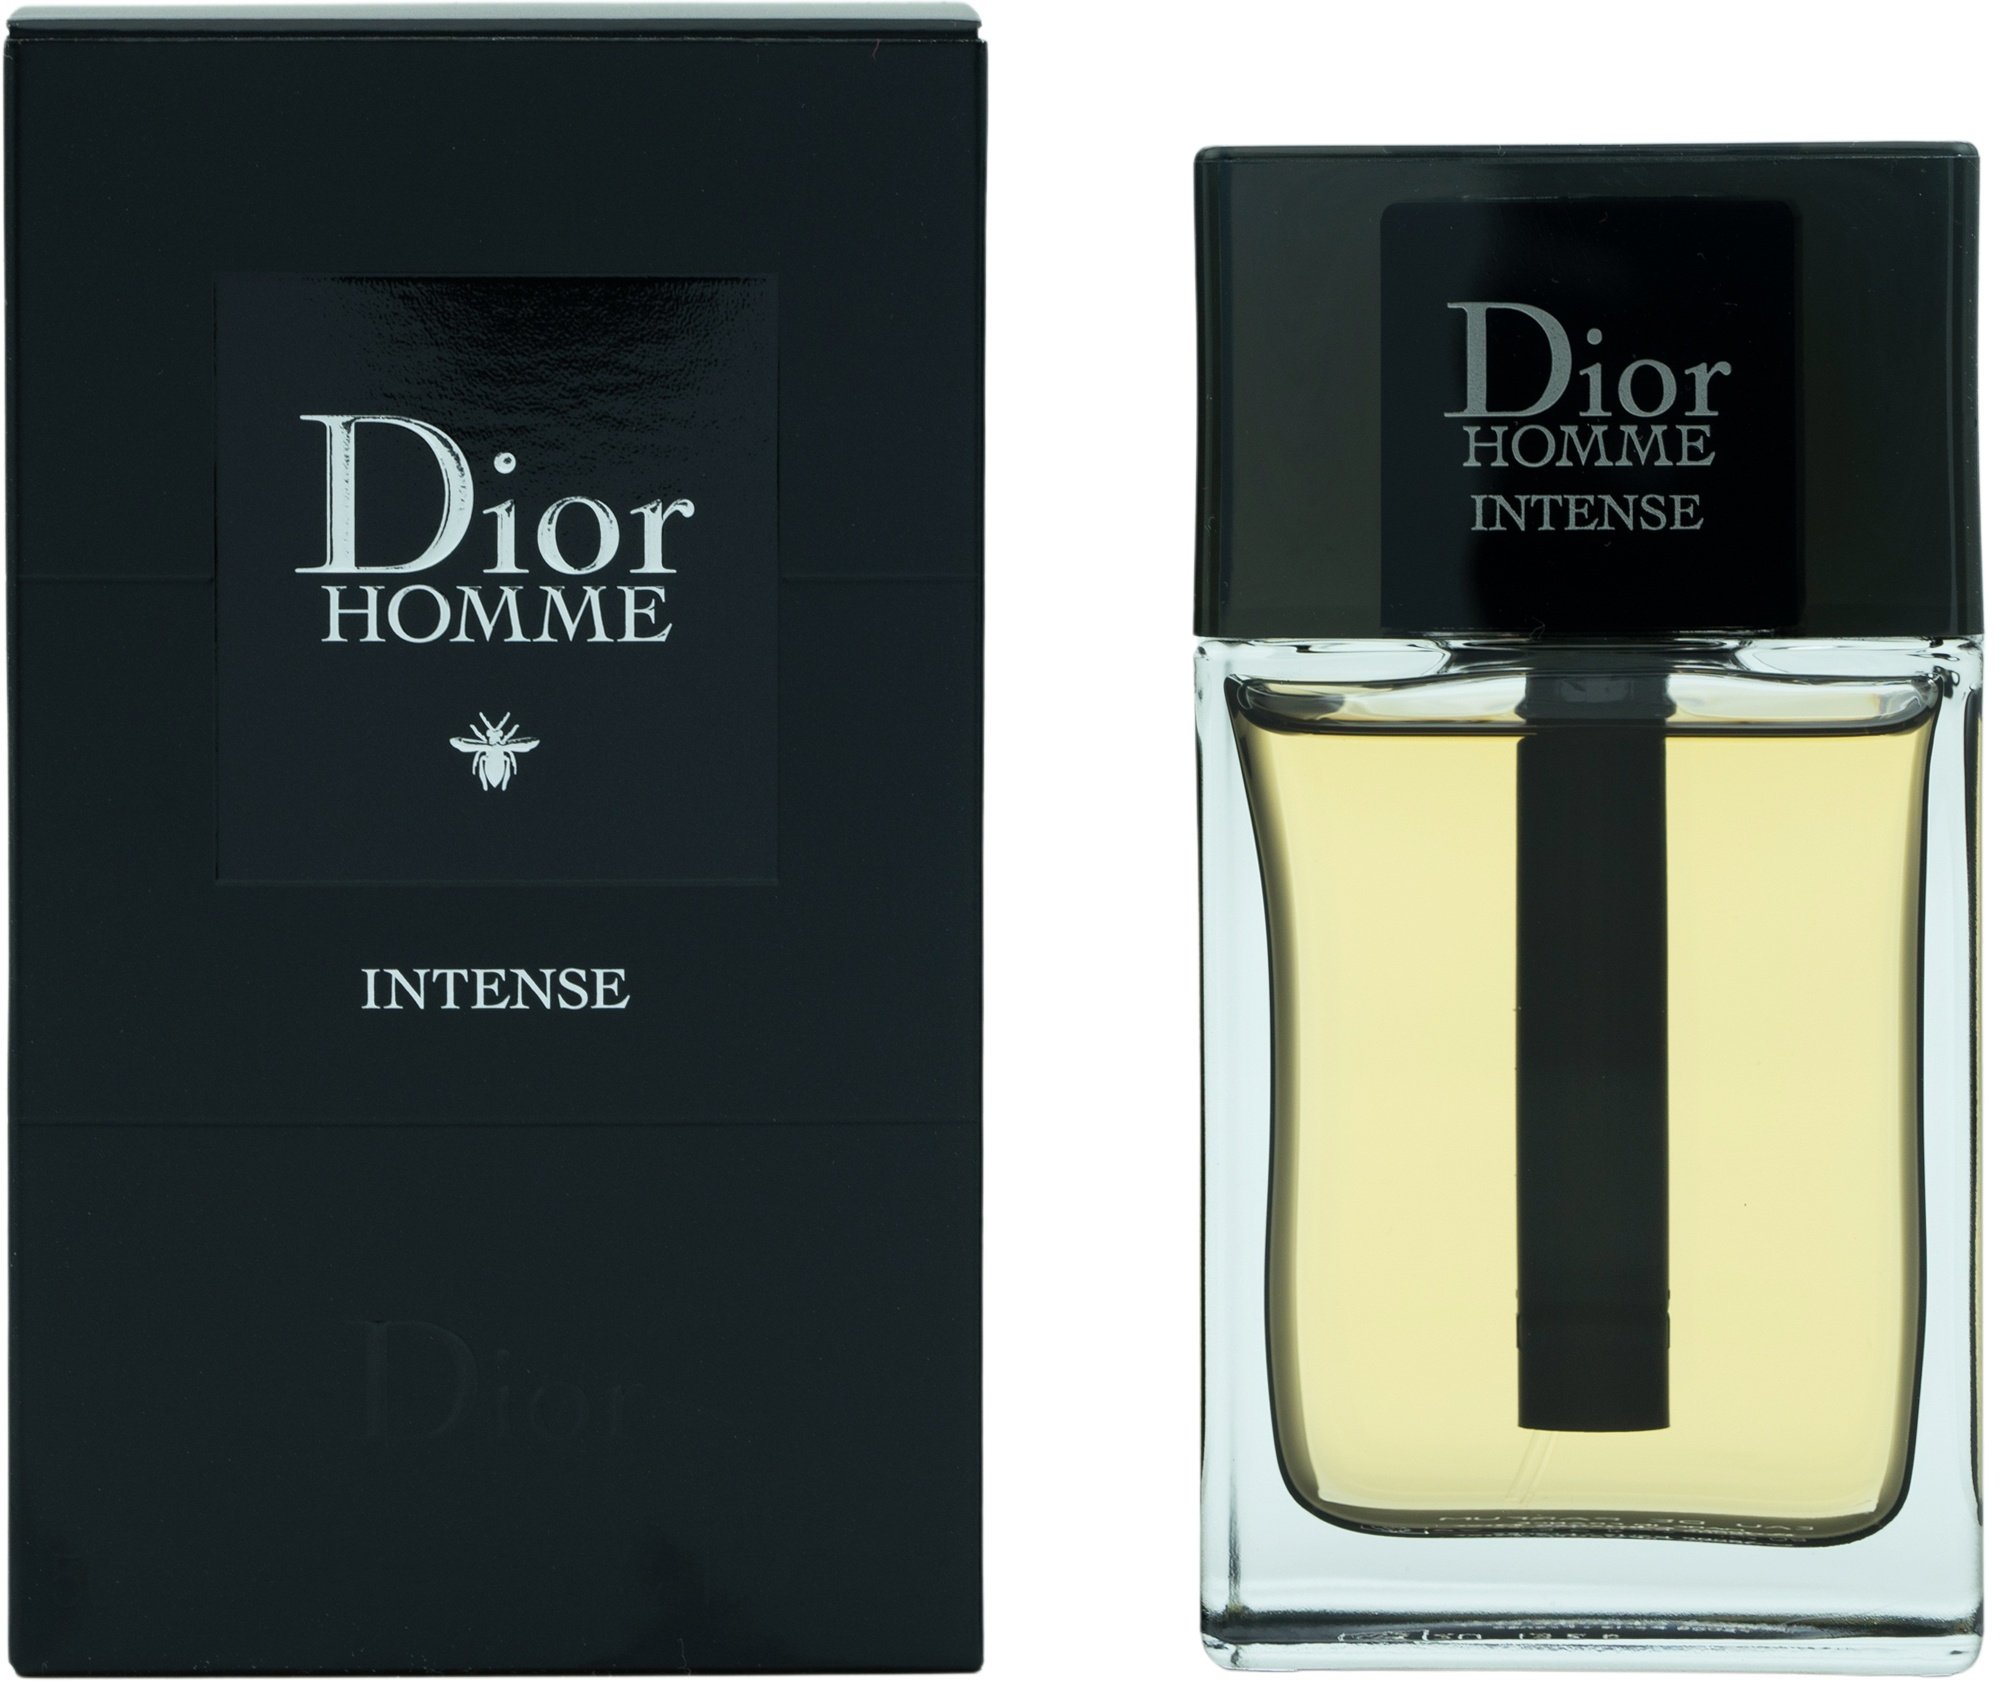 Parfum Uhren  Schmuck bei MyRichde entdecken  Dior Homme Intense Eau de  Parfum 150 ml Herren Duft EDP Spray